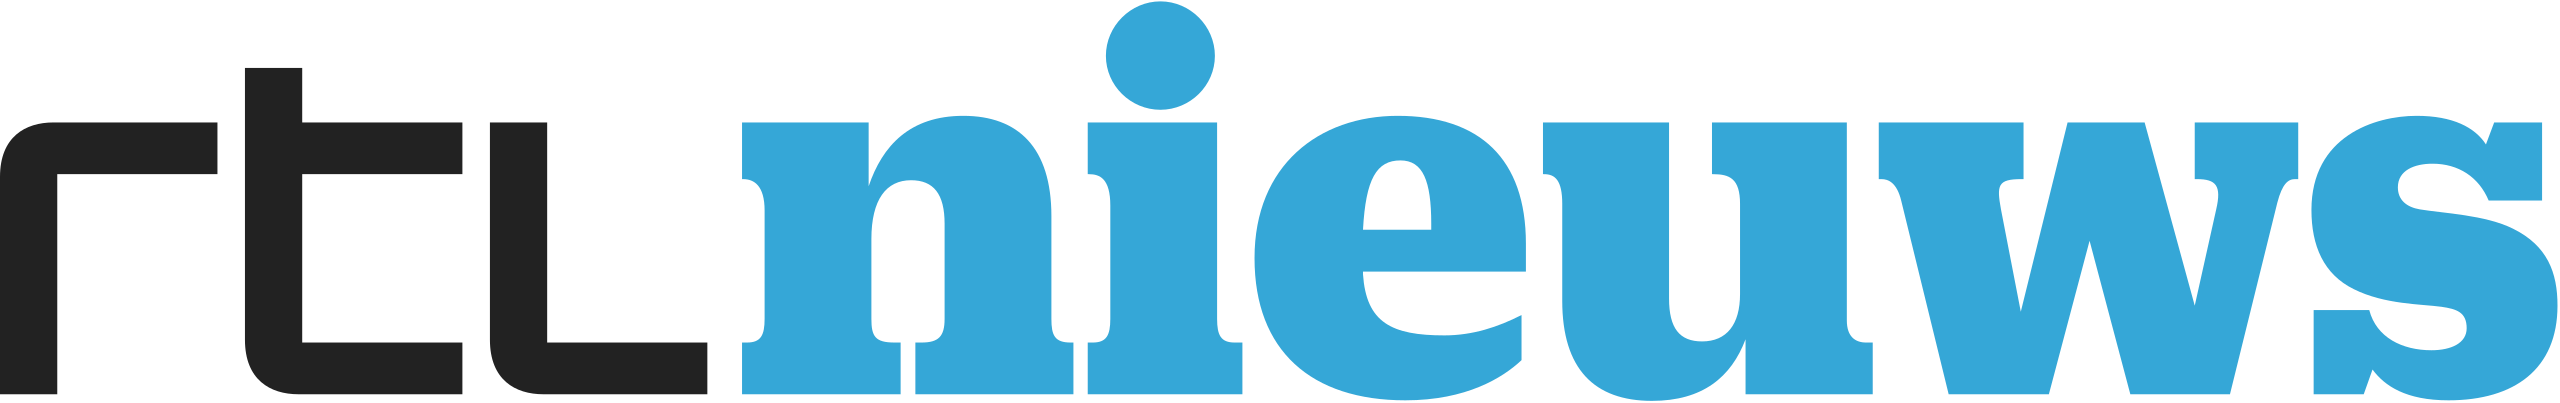 https://upload.wikimedia.org/wikipedia/commons/thumb/d/d8/RTL_Nieuws_logo_2014.svg/2560px-RTL_Nieuws_logo_2014.svg.png